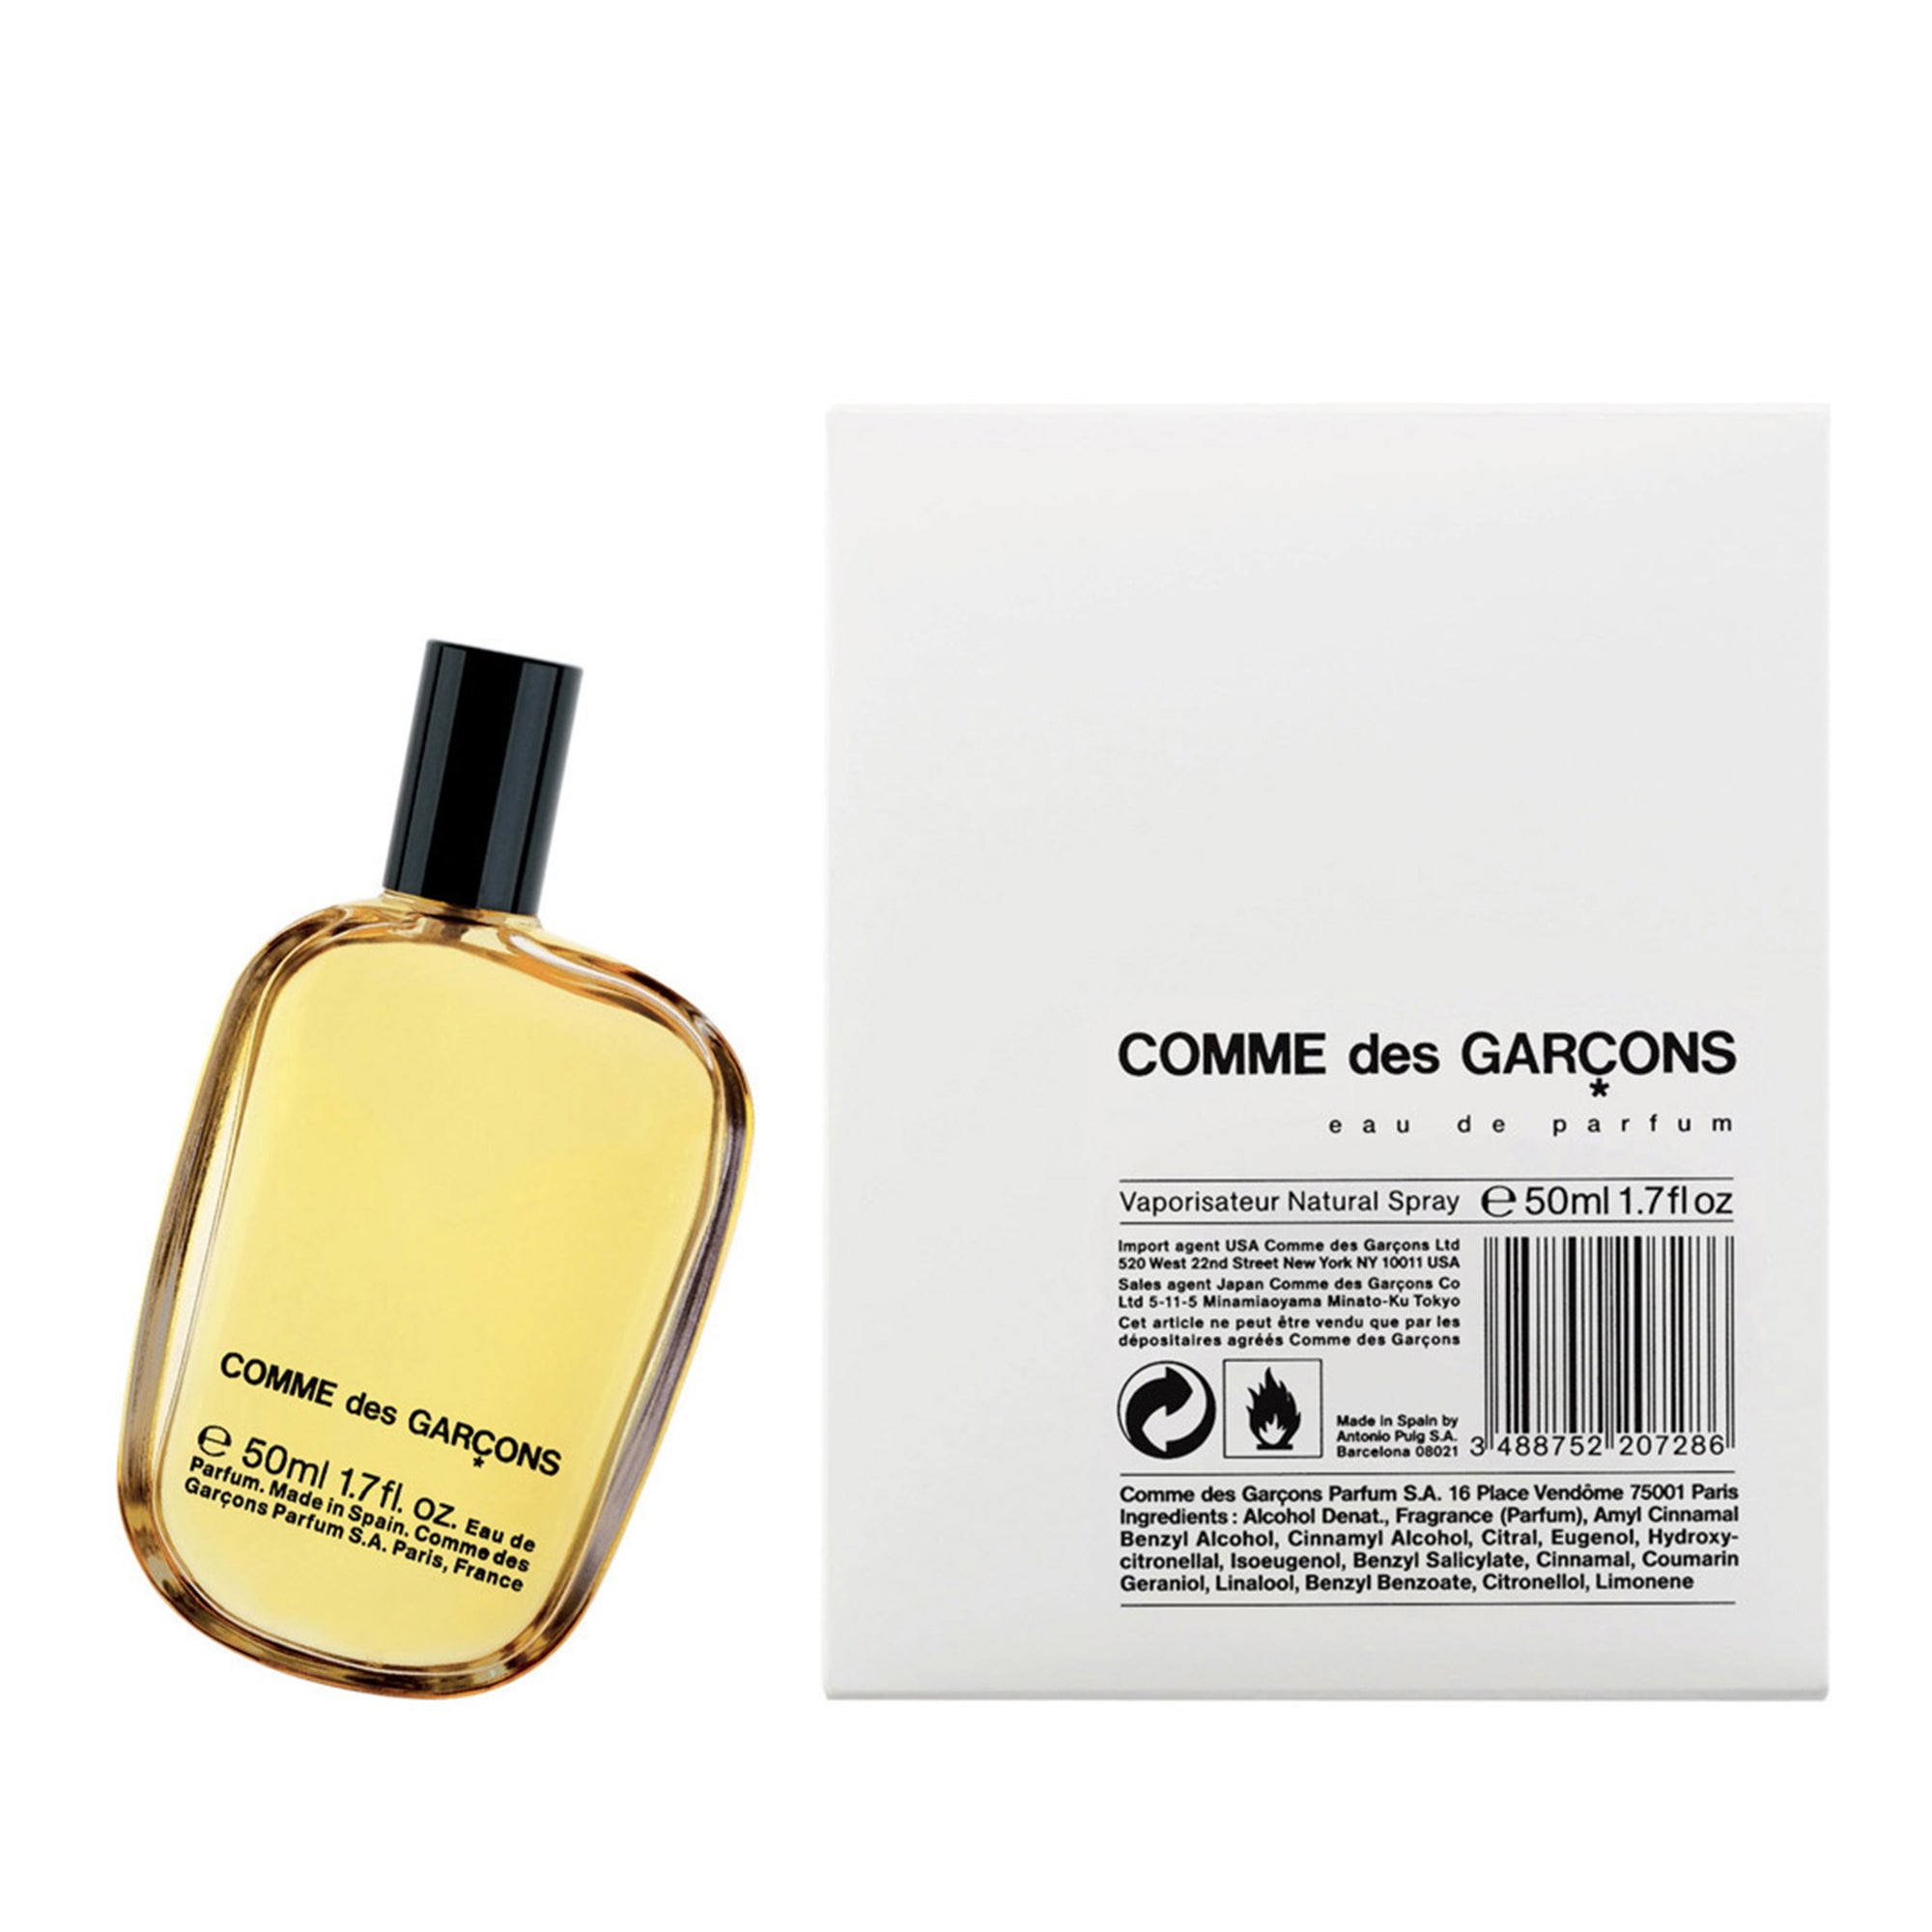 CDG Parfum - Eau de Parfum - (50ml natural spray) view 2